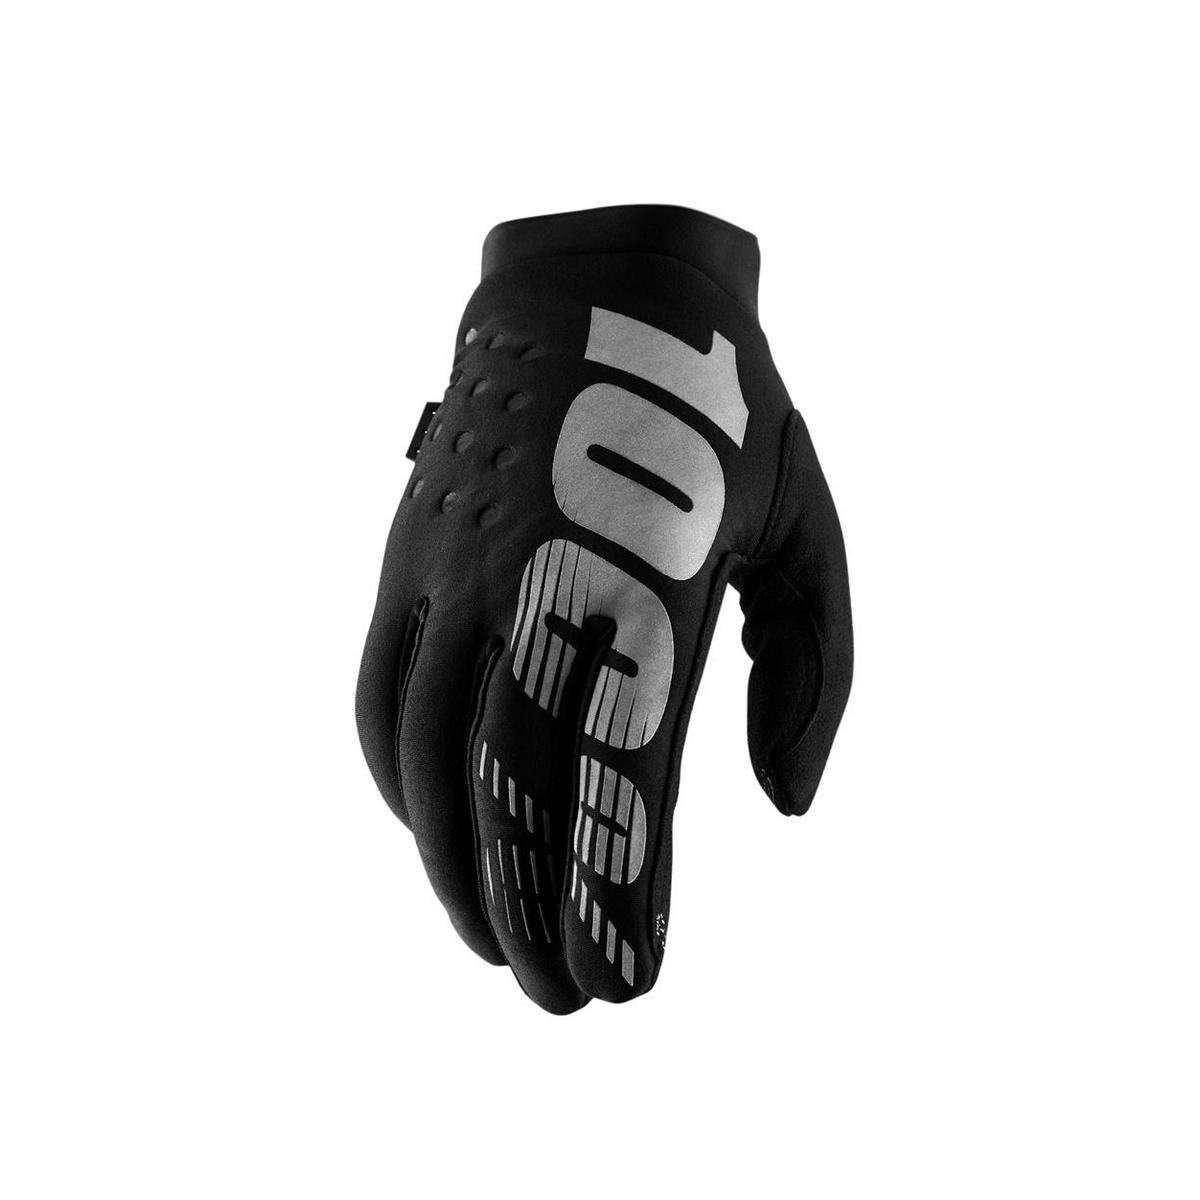 Winter gloves brisker black size XL